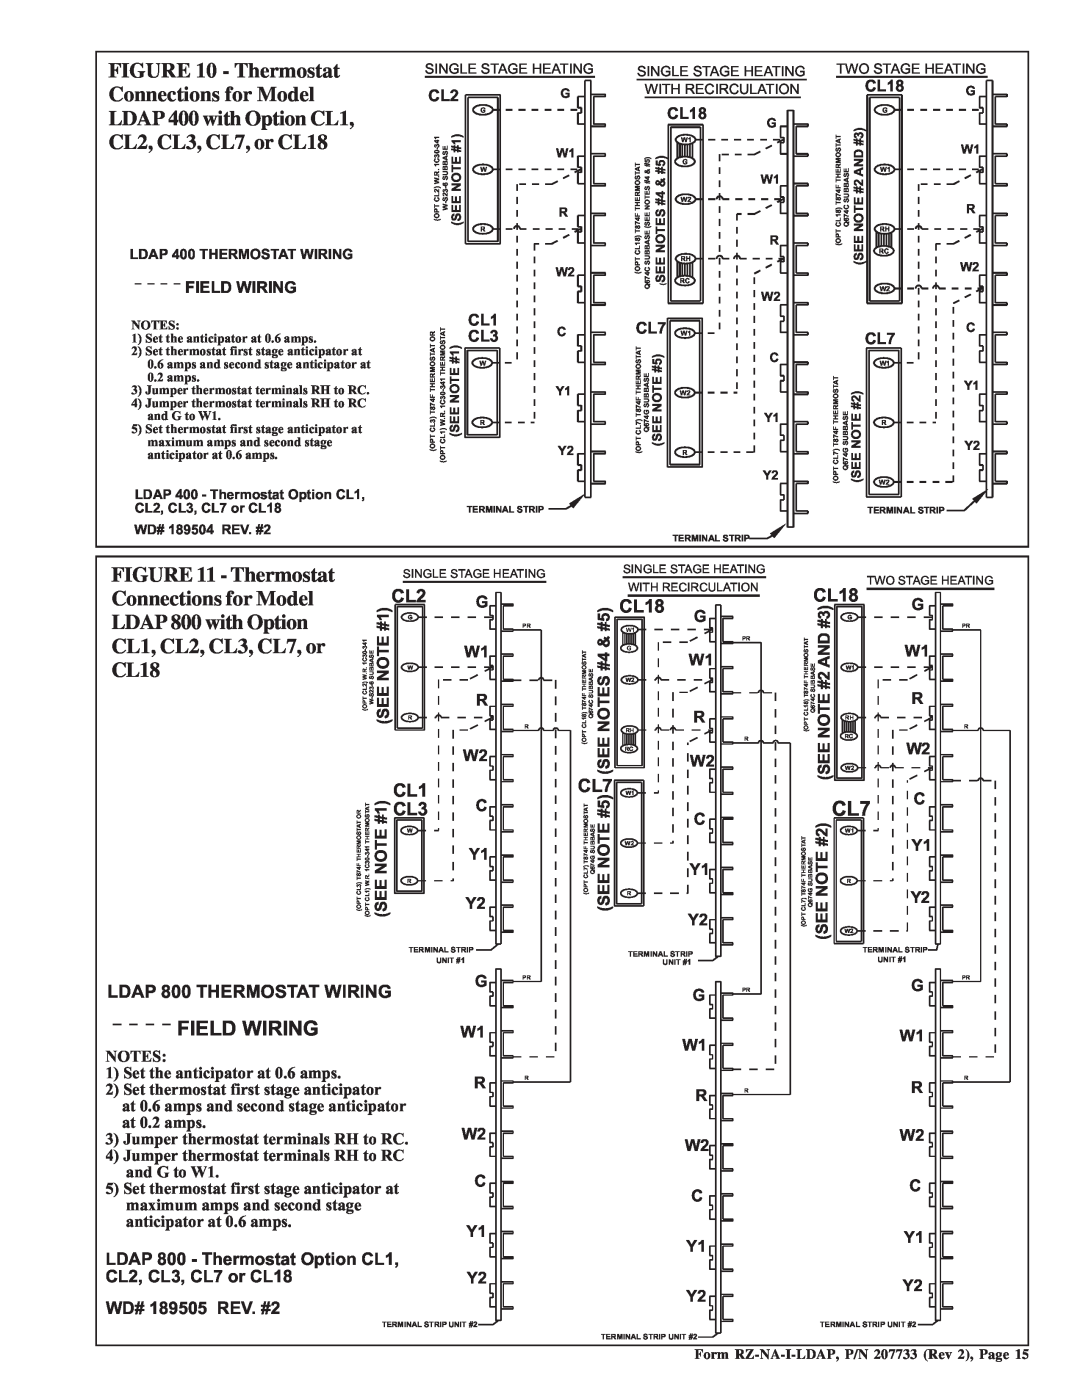 Thomas & Betts LDAP 1200 warranty Field Wiring, CL18 G, LDAP 800 THERMOSTAT WIRING 